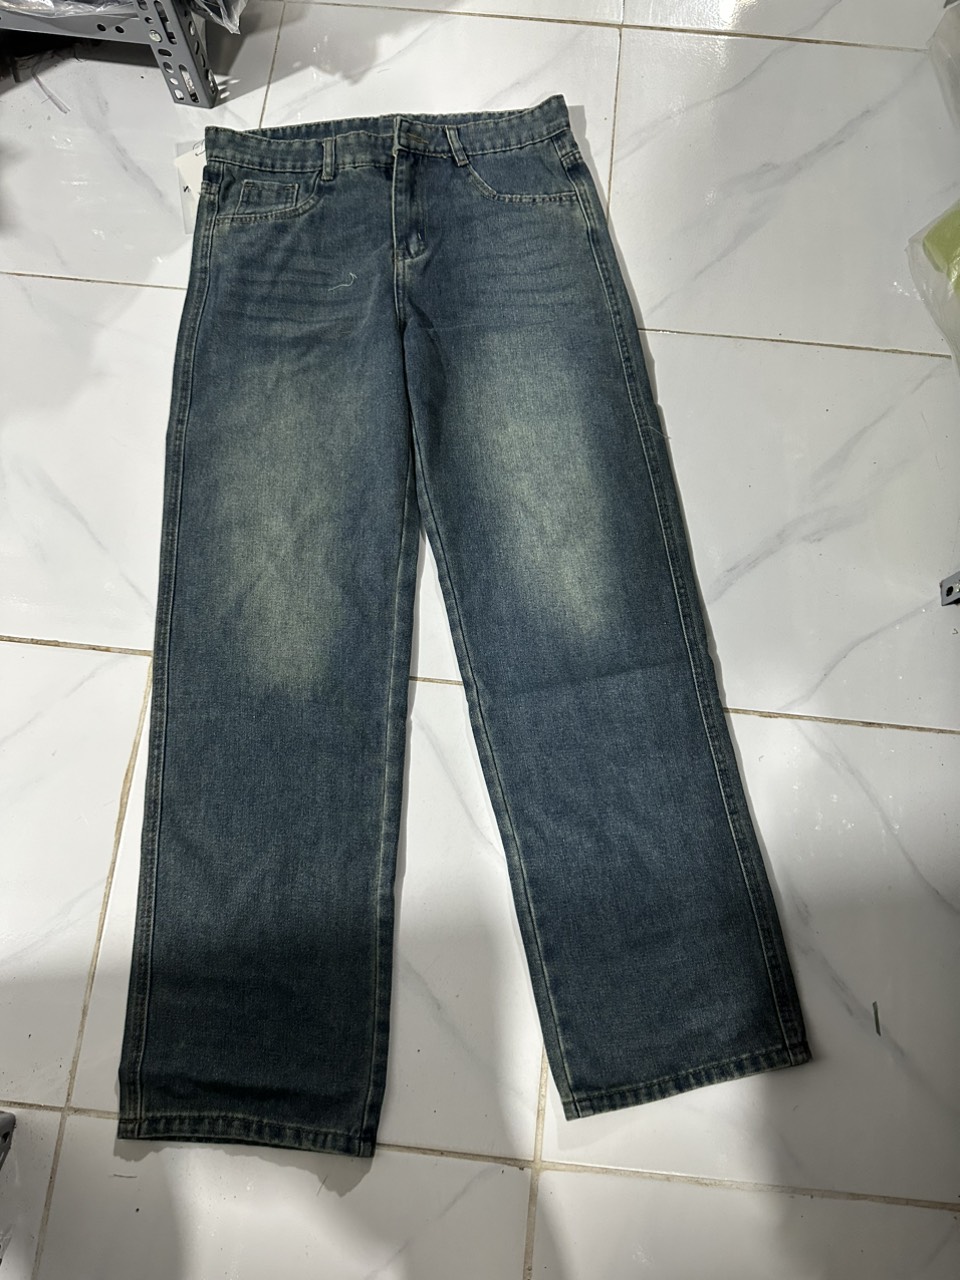 quần jean nam nữ Quanjean9001 